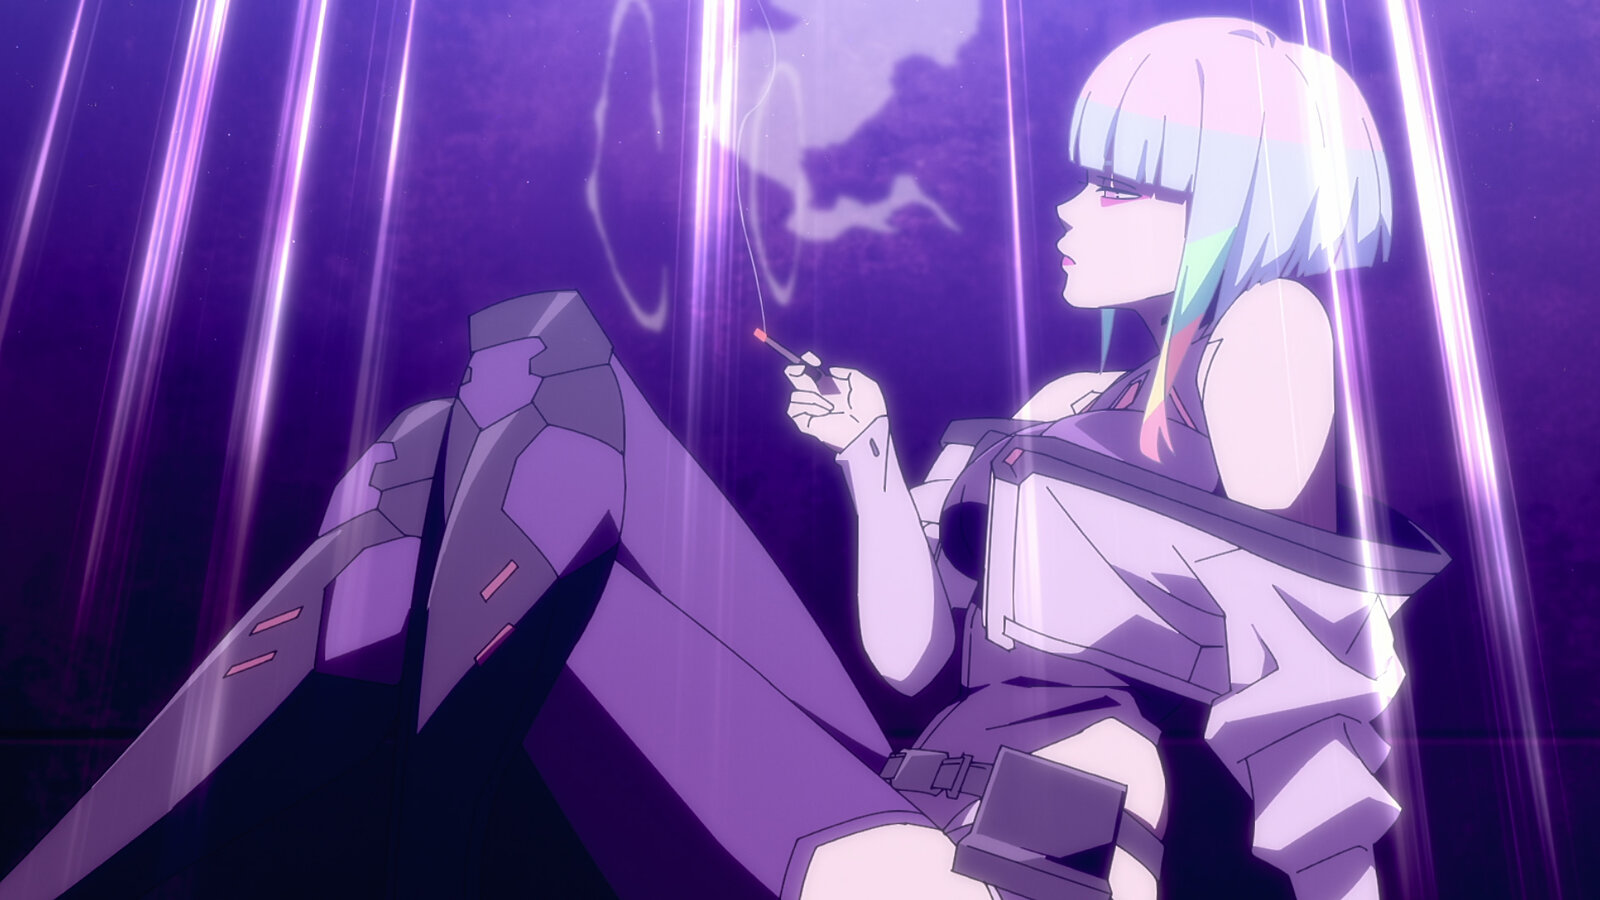 Cyberpunk Anime Coming To Netflix